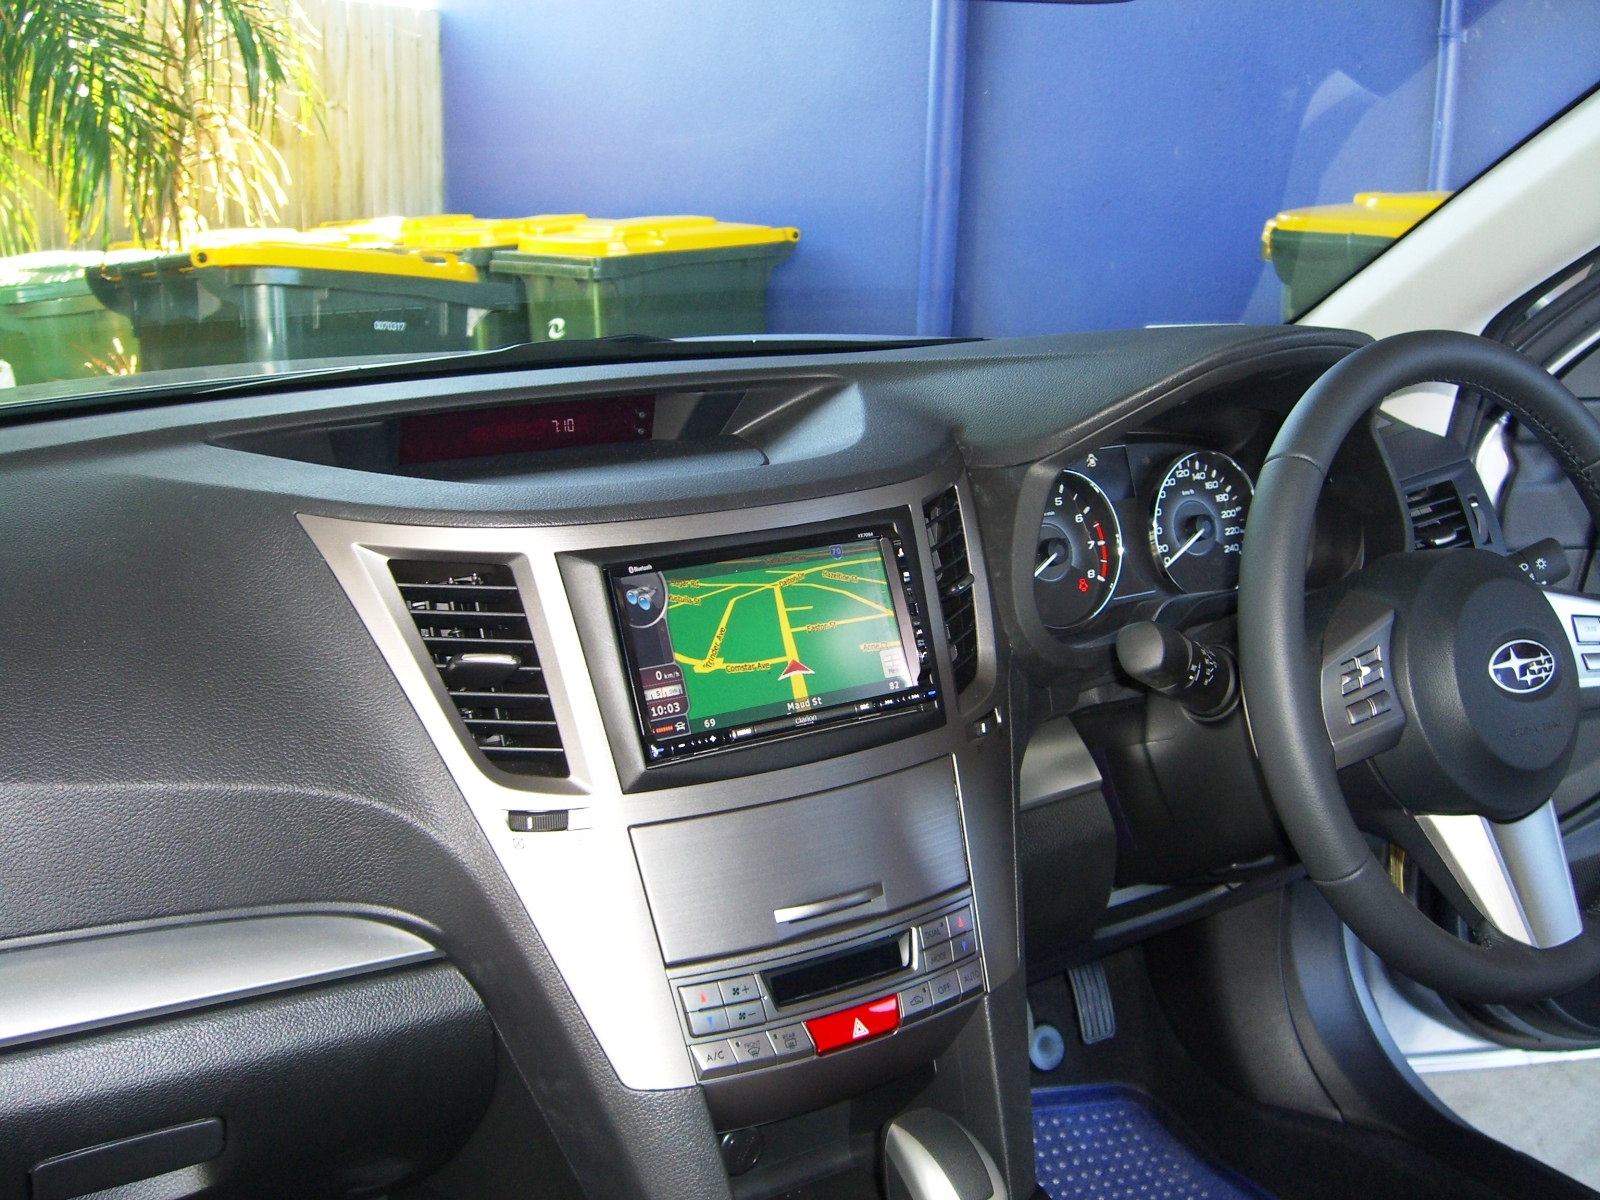 Subaru Liberty 2010 Clarion Gps navigation unit with custom dash mount